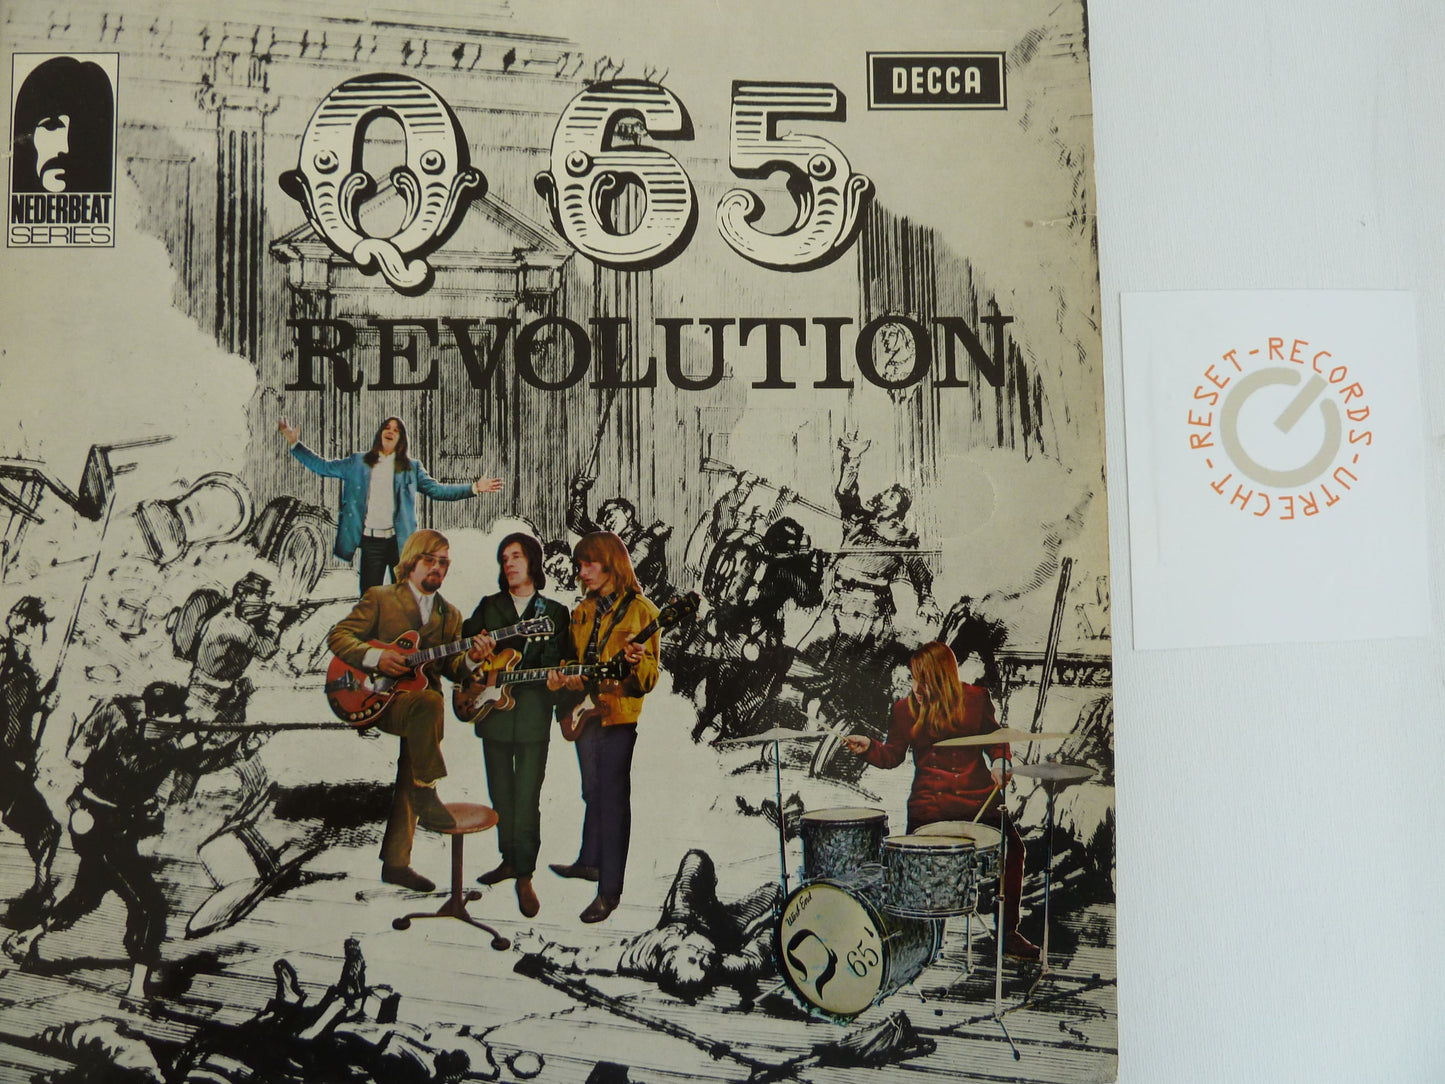 Revolution #3 inspired by Q65 – Revolution